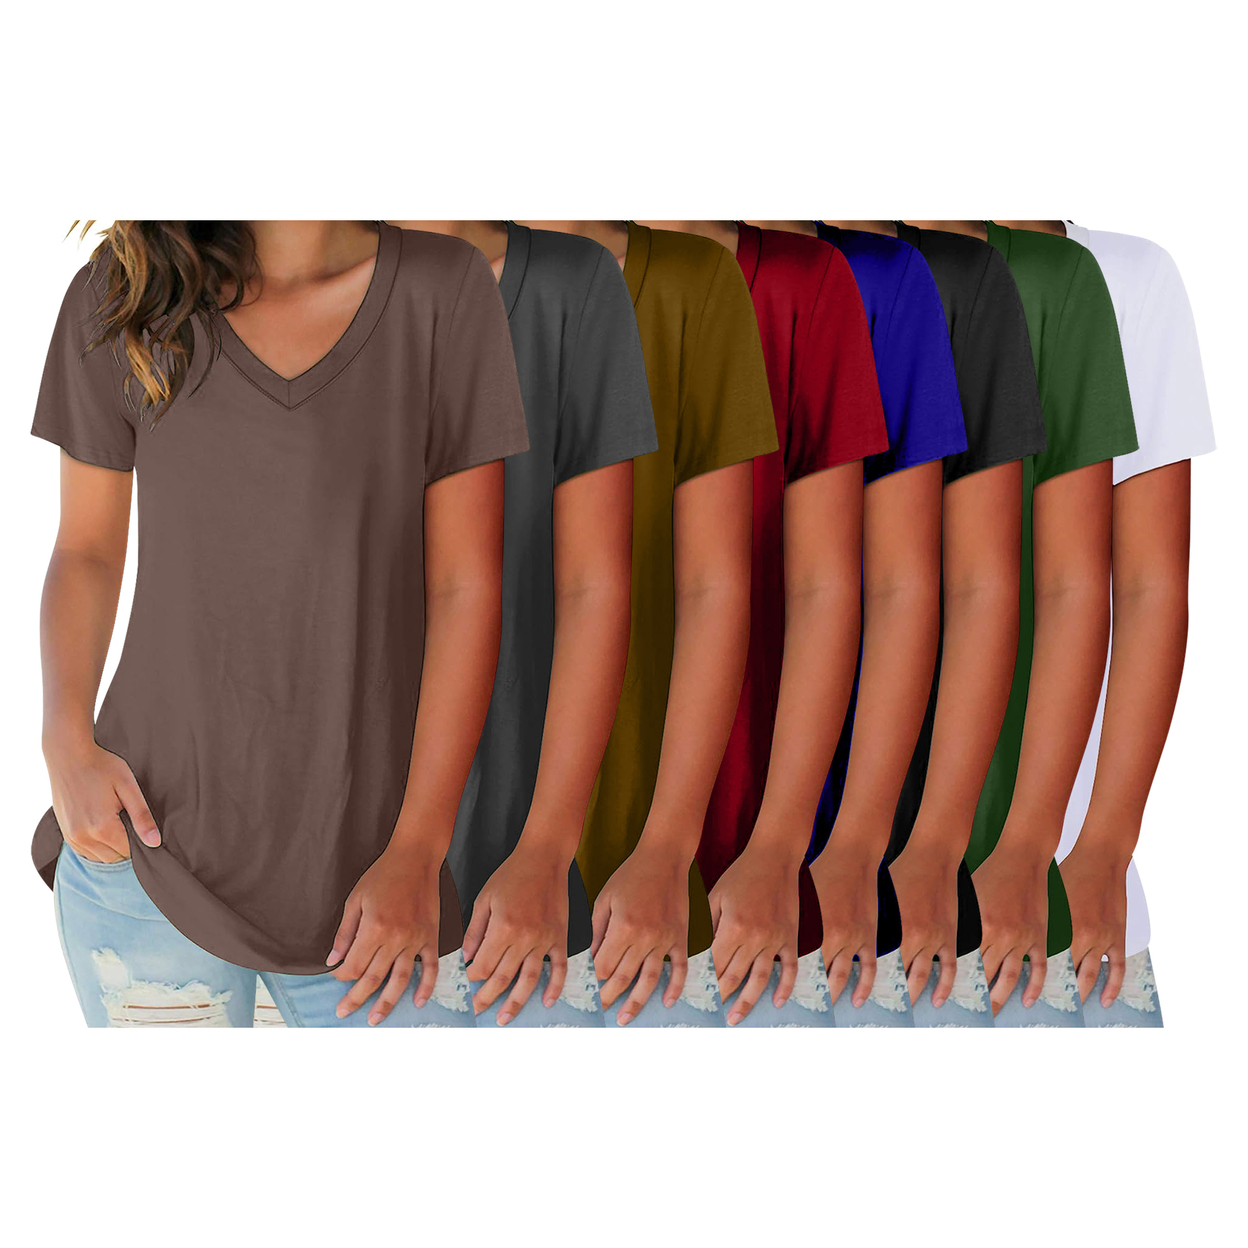 2-Pack: Women's Ultra Soft Smooth Cotton Blend Basic V-Neck Short Sleeve Shirts - Black & Navy, Large